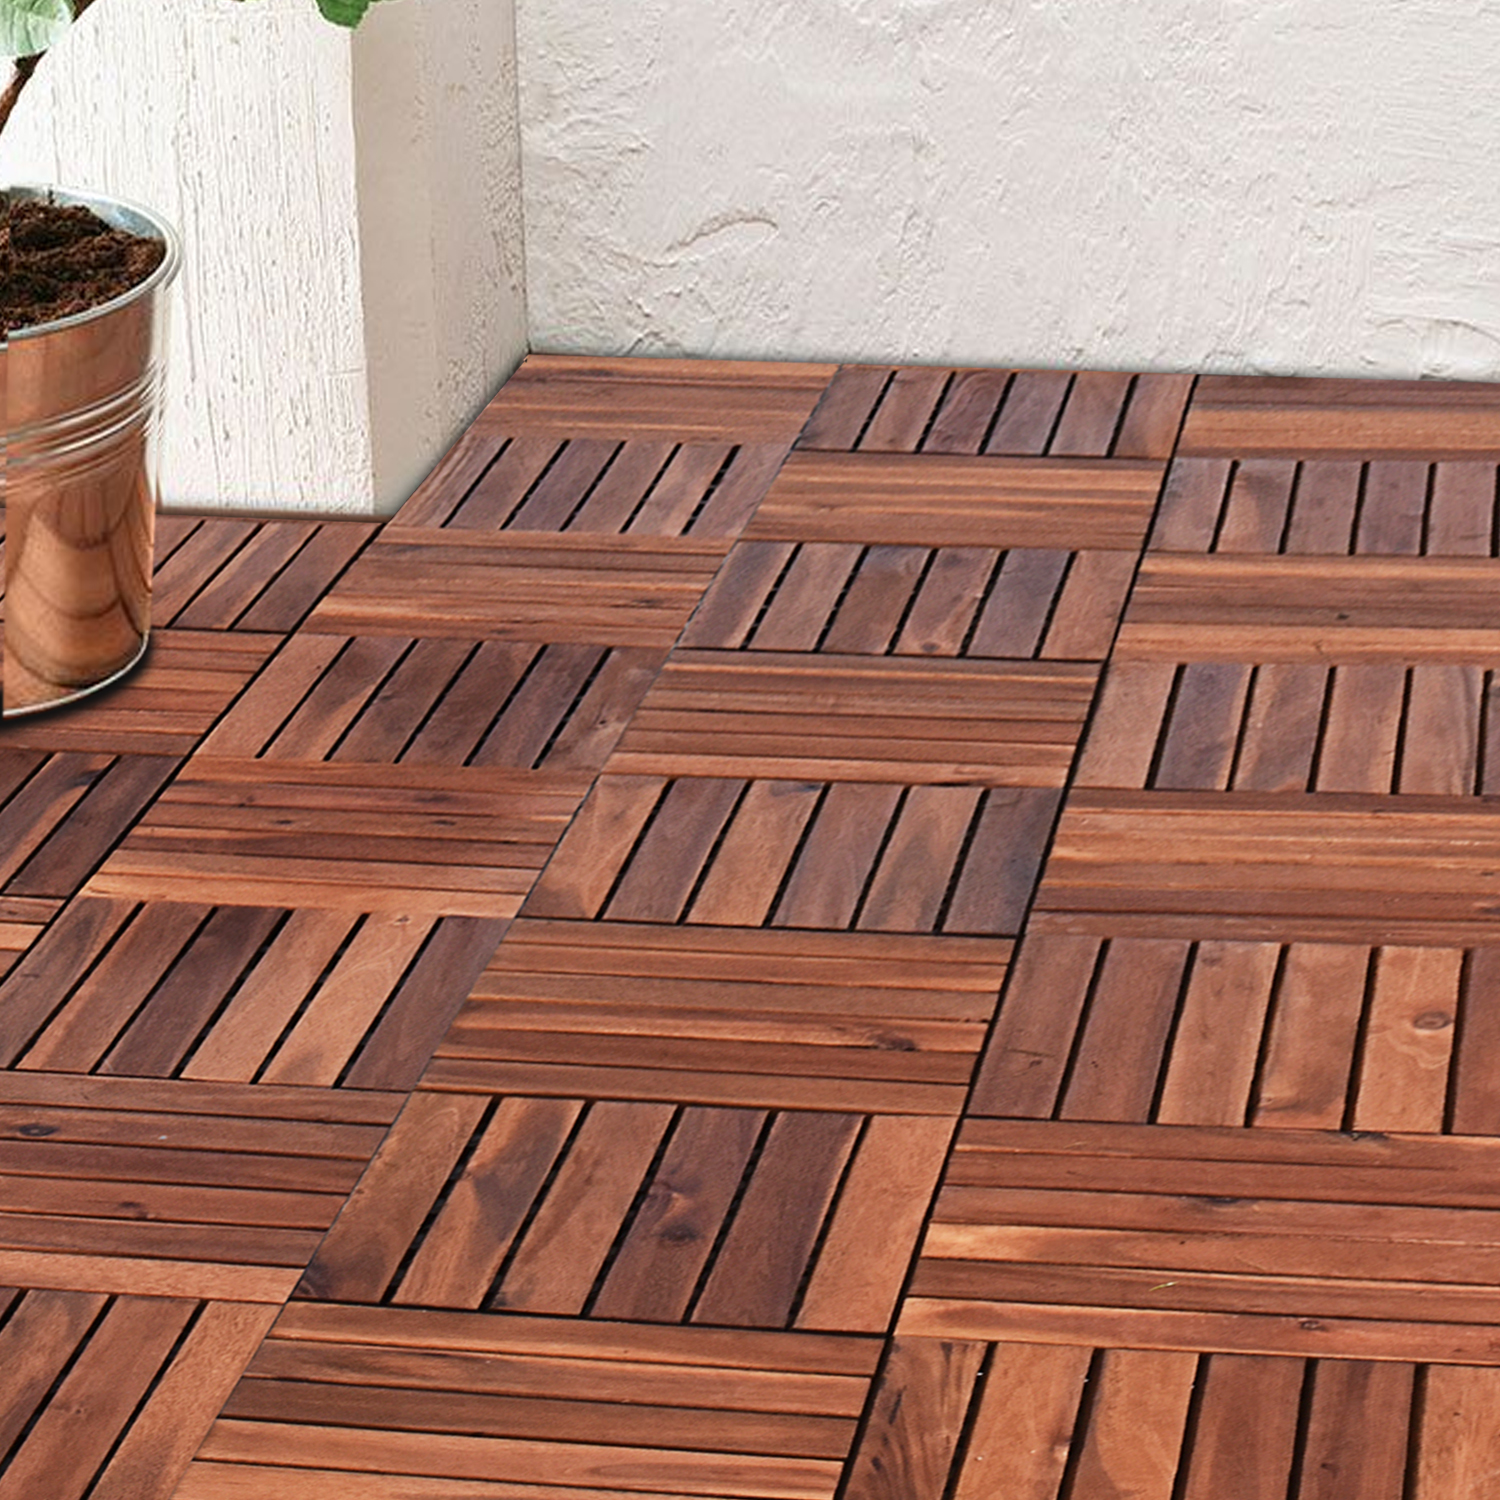 Interlocking Wooden Click Deck Decking Tiles Outdoor Balcony Wood Patio Garden Ebay